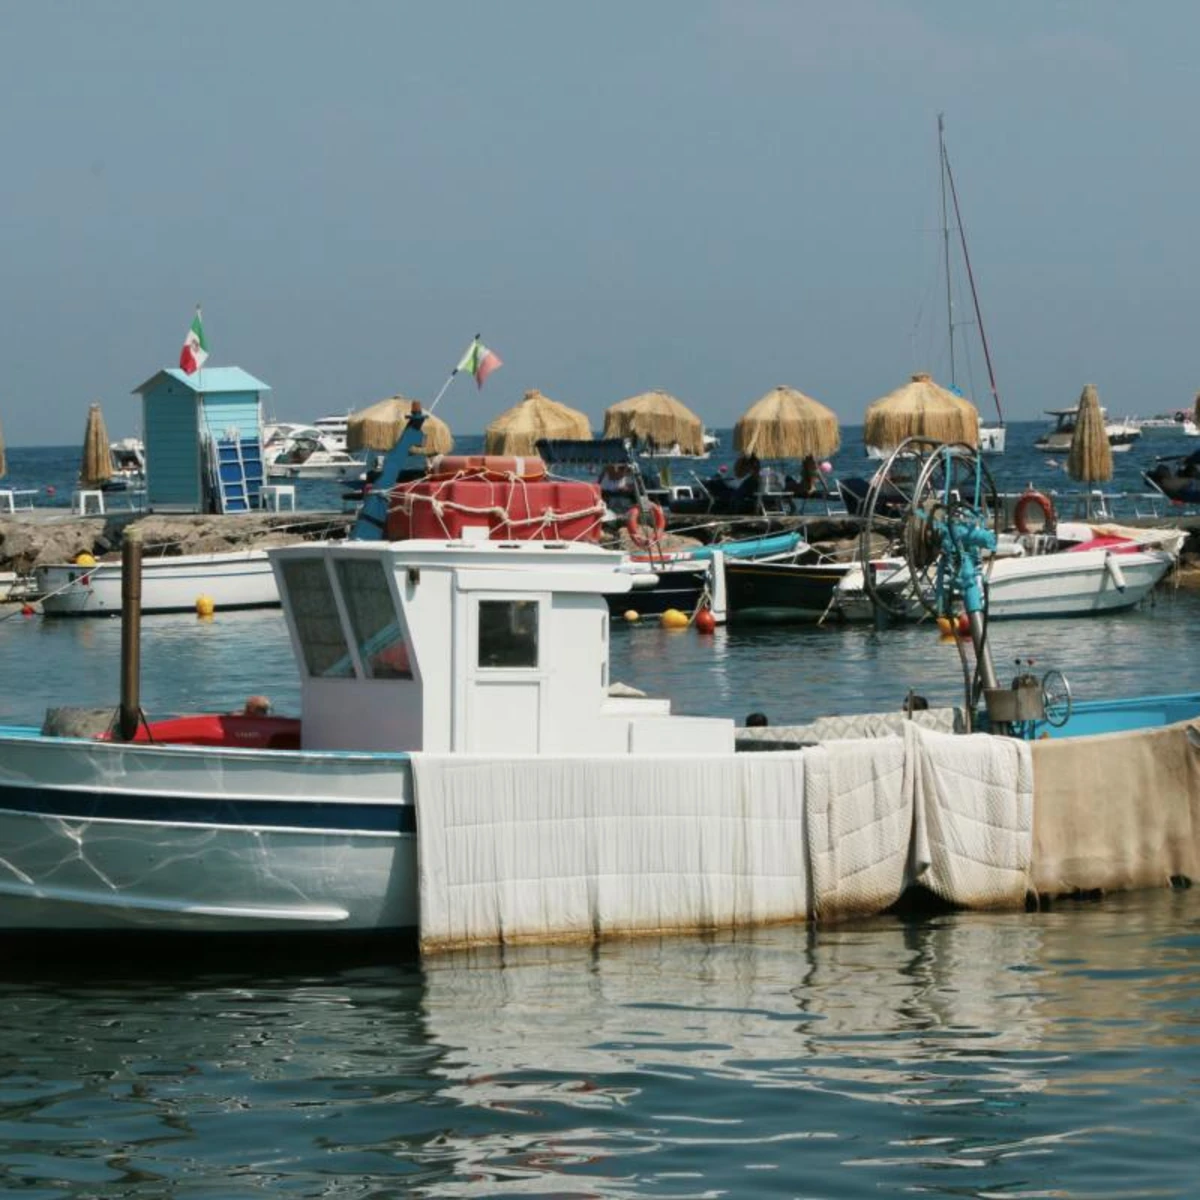 Fishermen's boats at bay by Ischia, an Italian island.